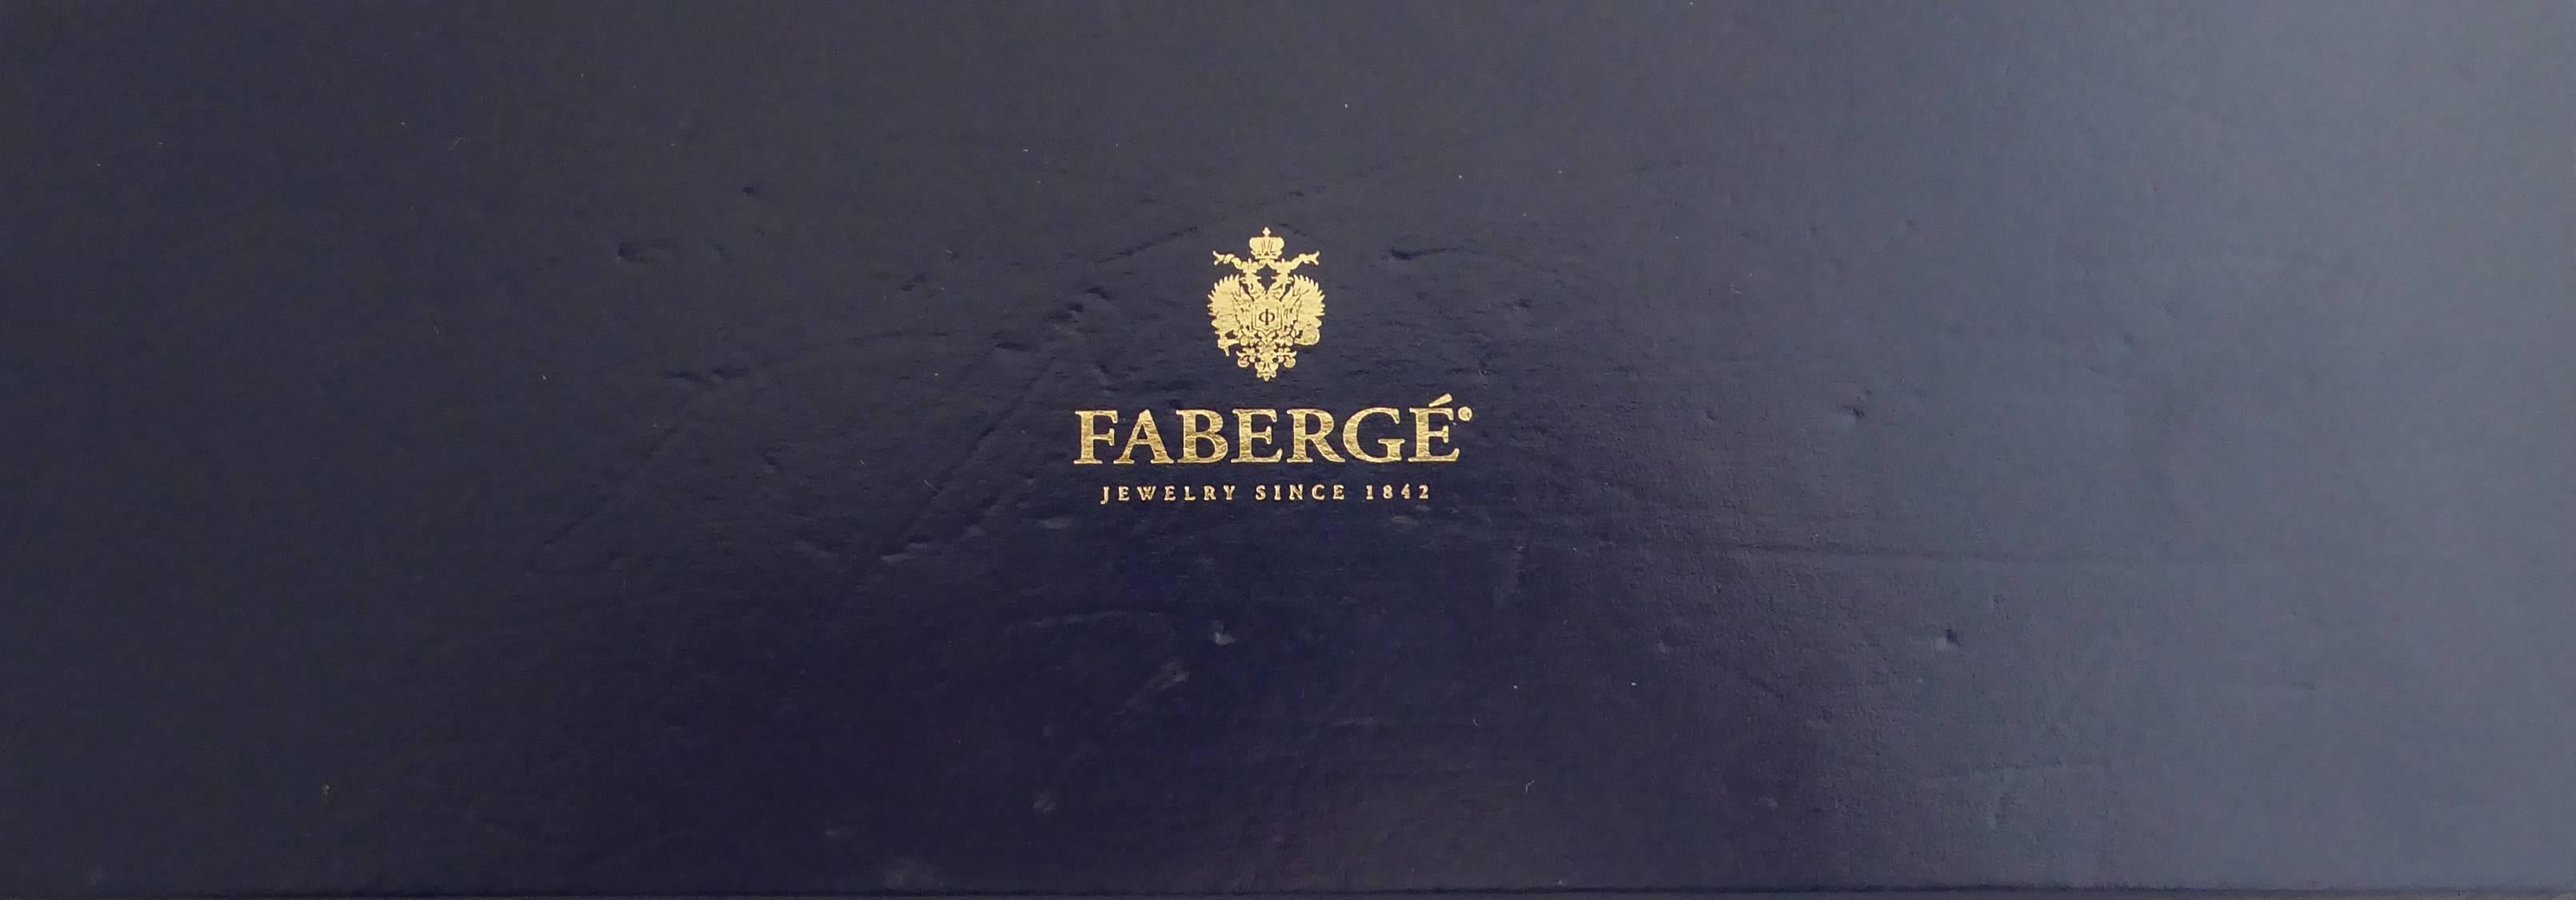 Faberge Easter Egg Charm Bracelet, Gold, Enamel, 0.18 Carat Diamonds, Boxed 8